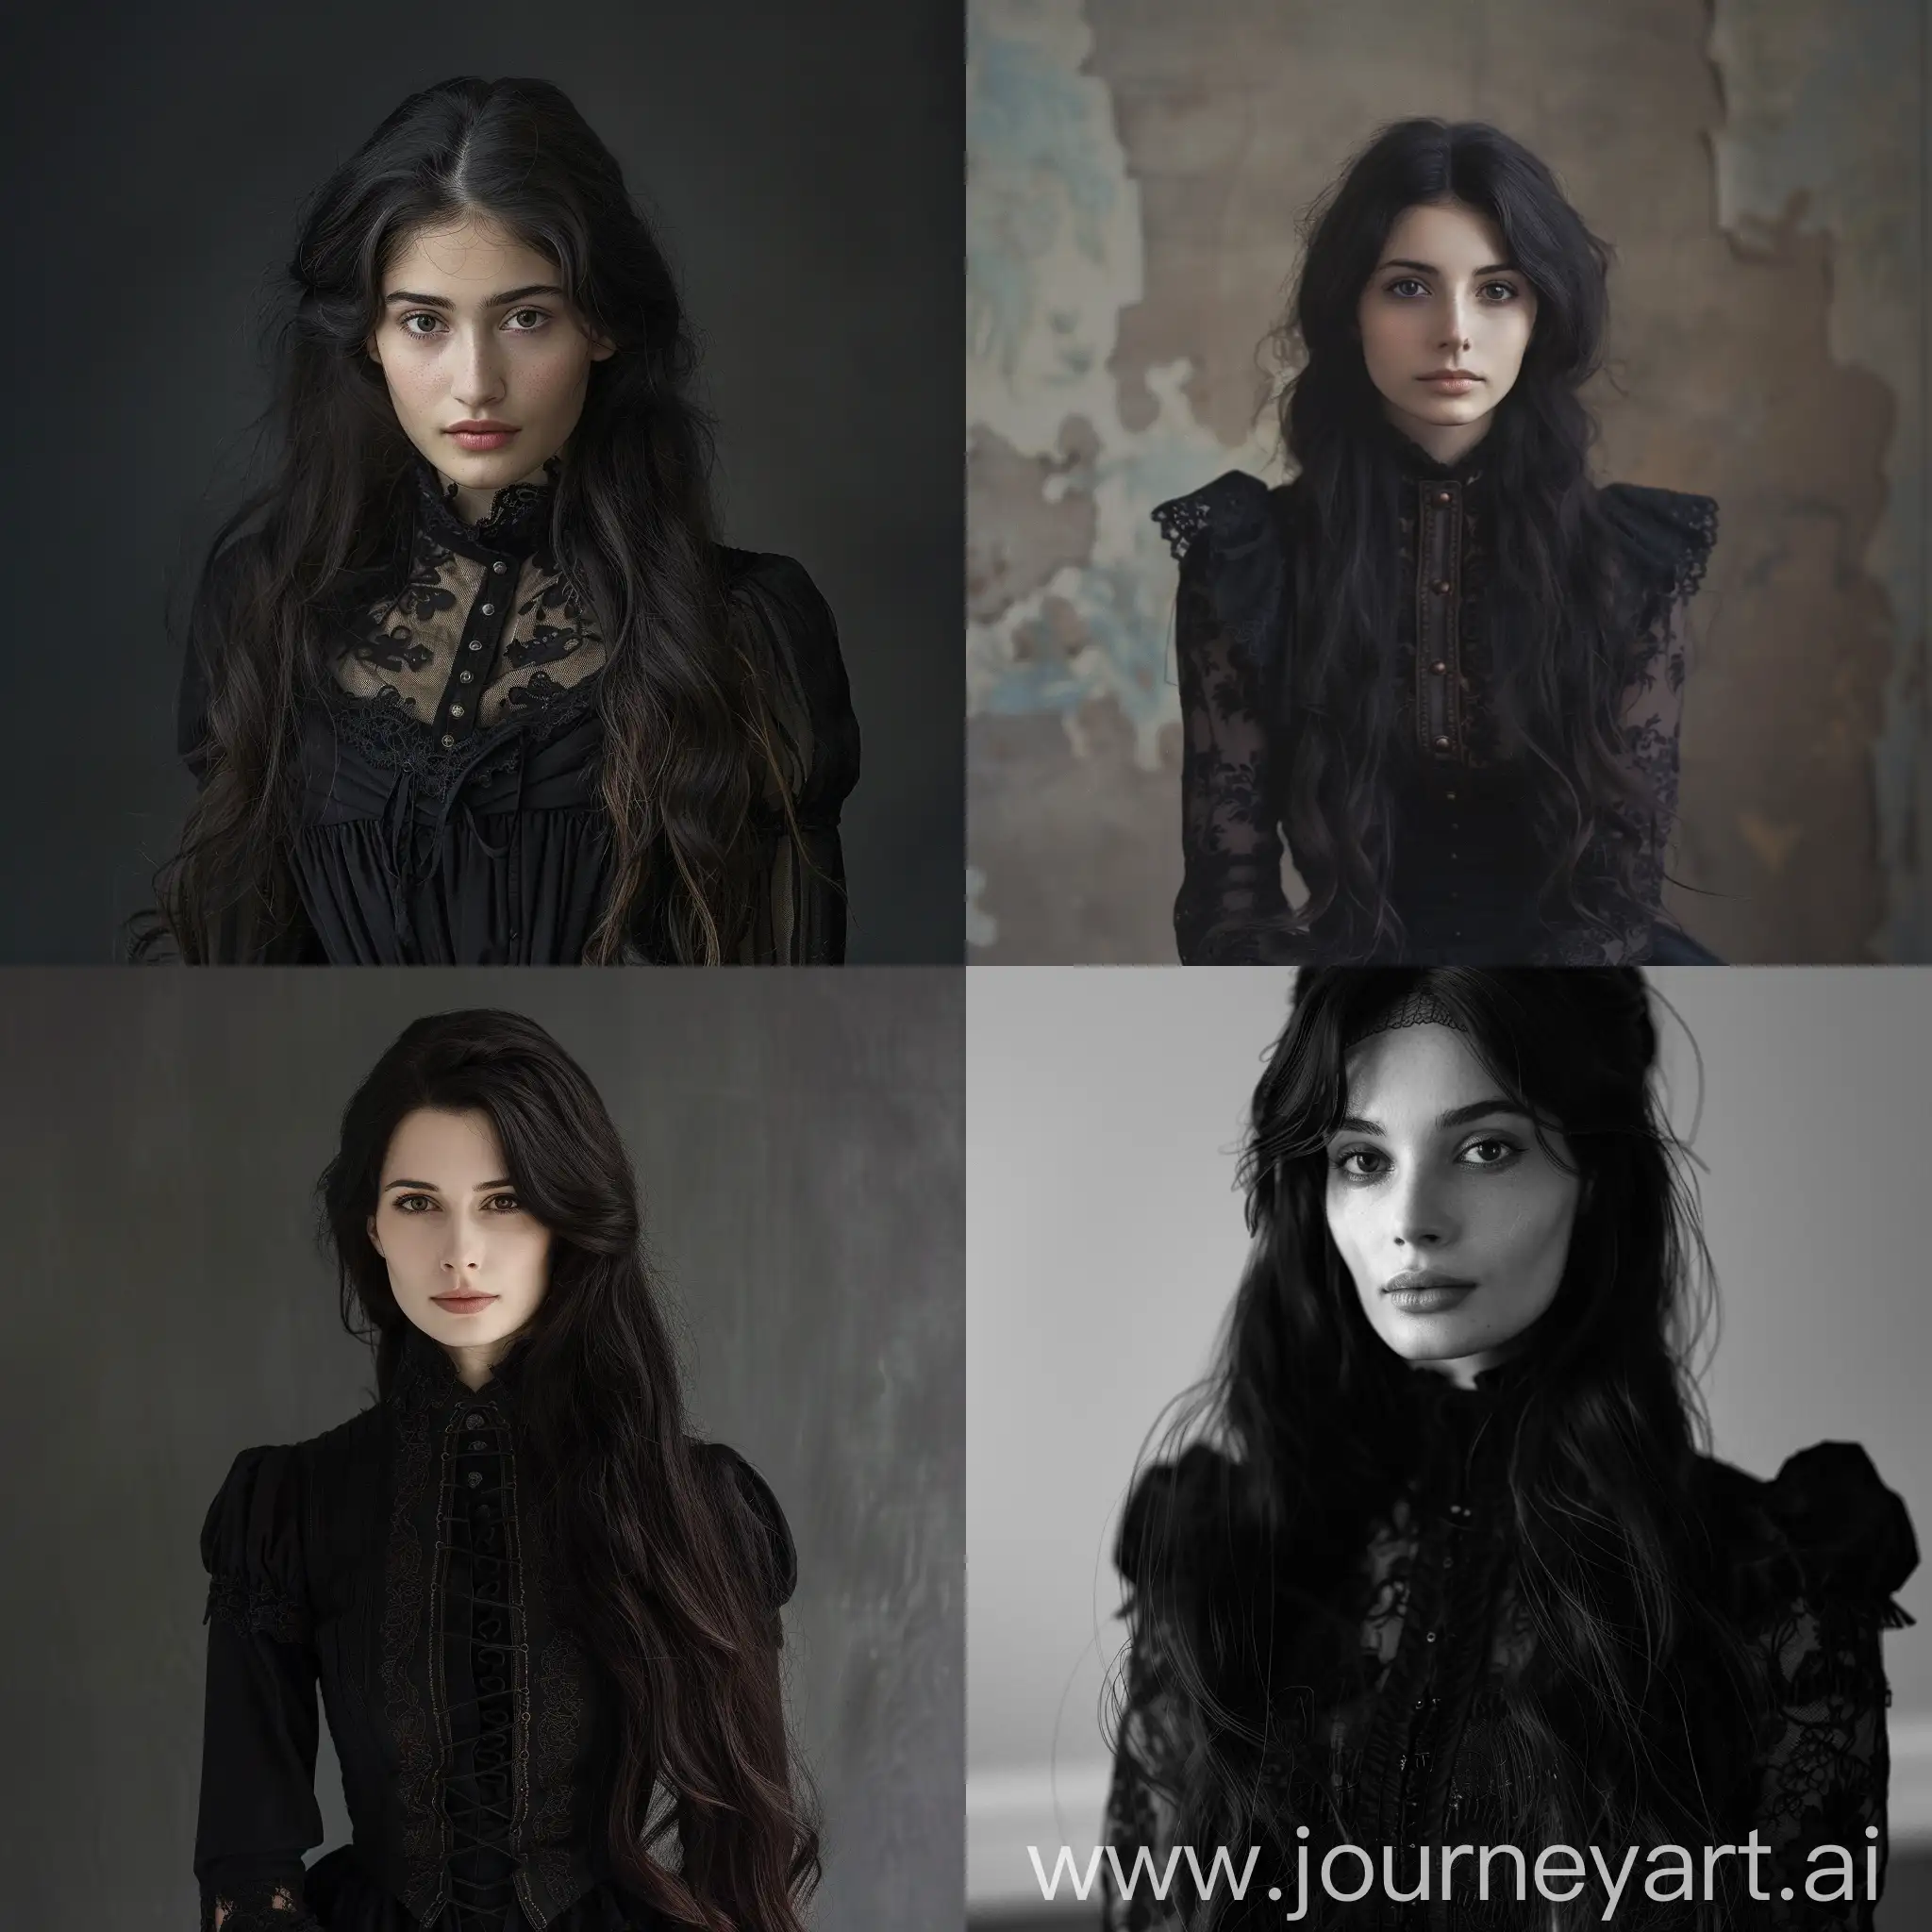 Ethereal-25YearOld-Woman-in-Dark-Victorian-Attire